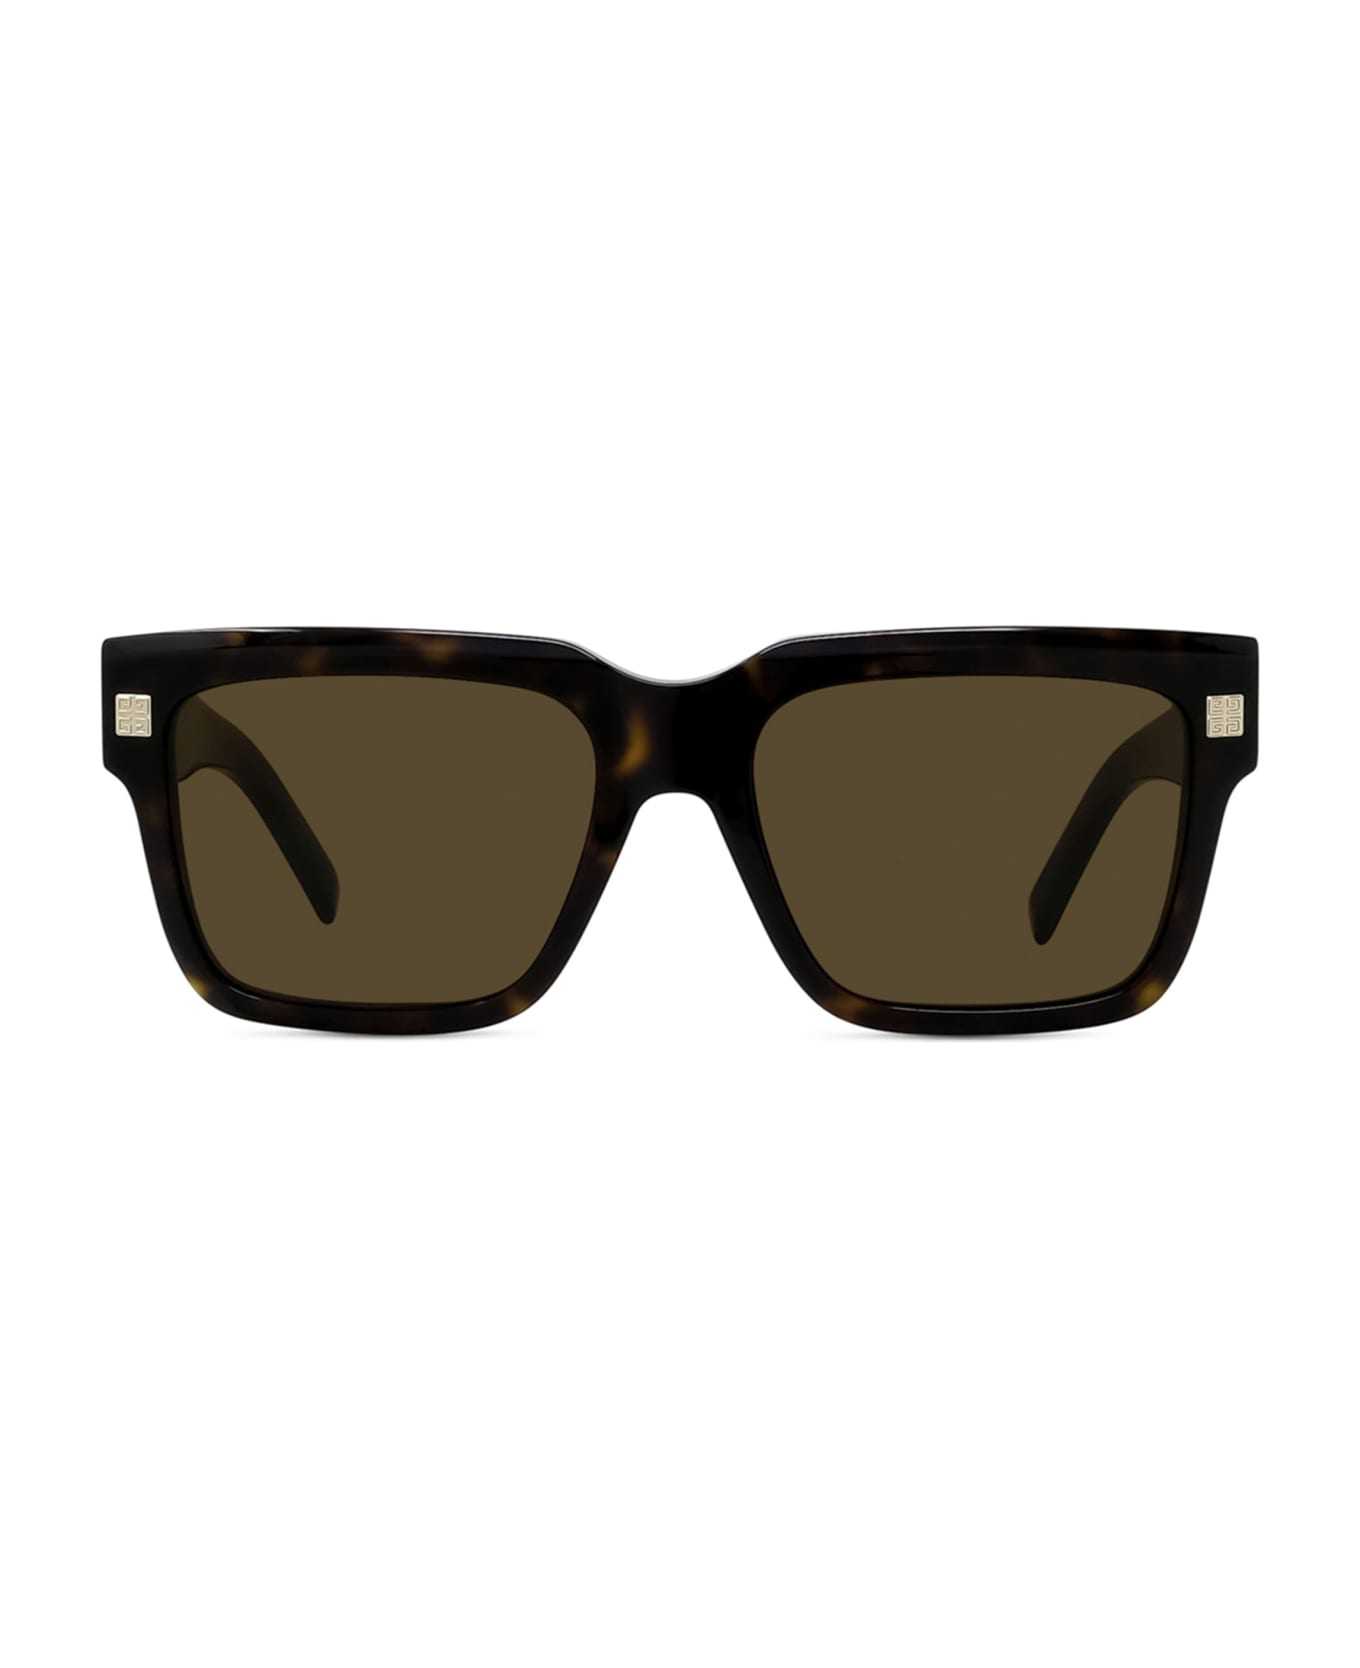 Givenchy Eyewear Gv40060i - Dark Havana Sunglasses - Havana サングラス